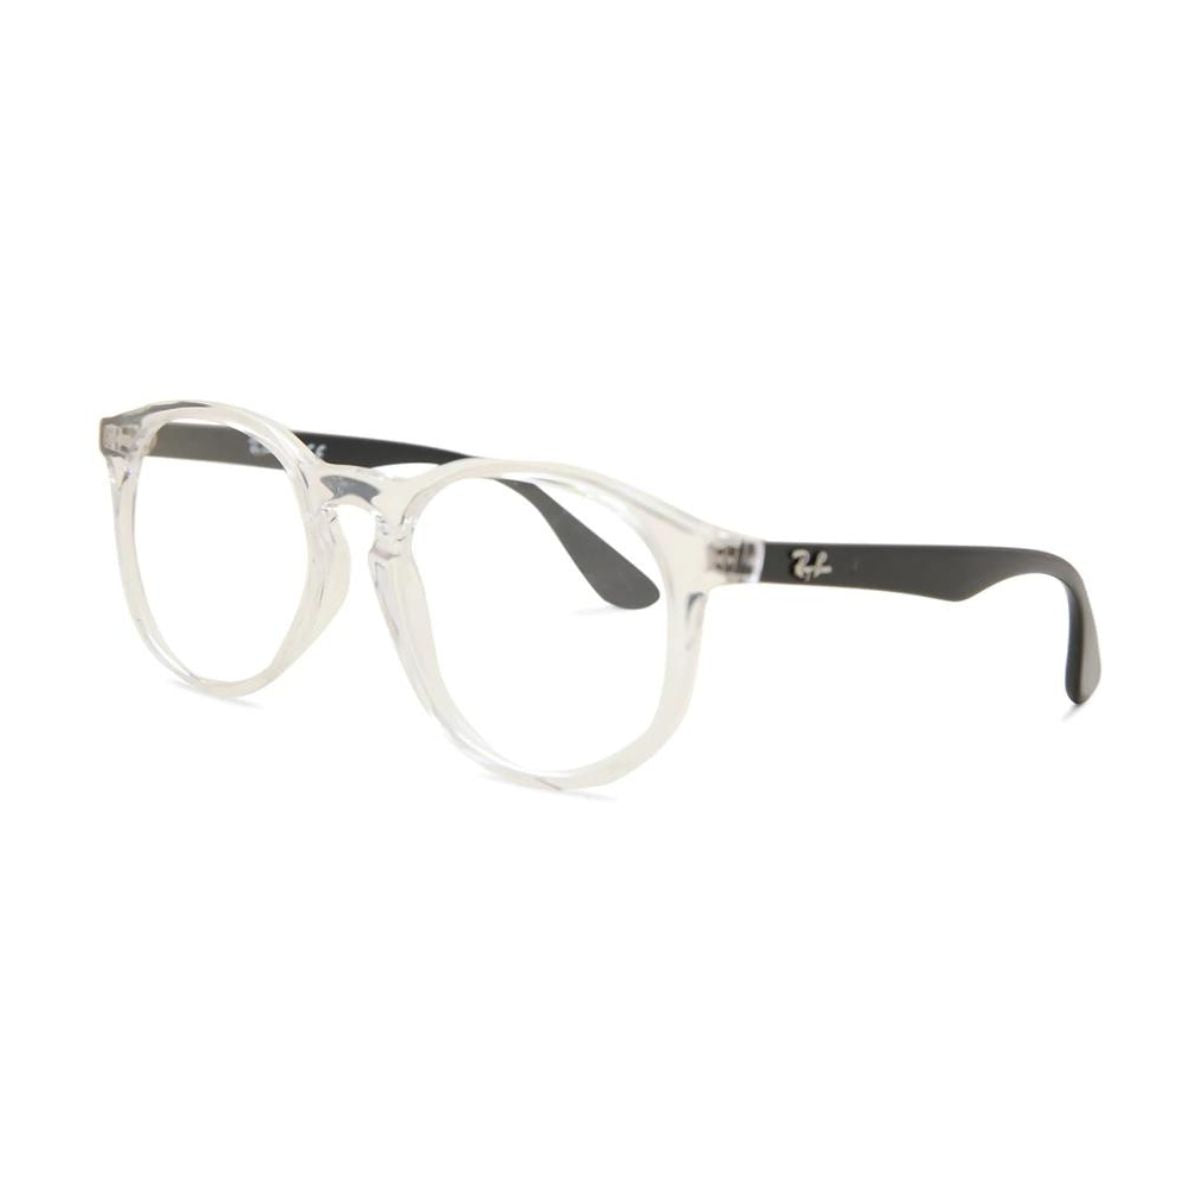 "Rayban 1554 3541 trendy eyewear & power glasses frame for men's and women's at optorium"